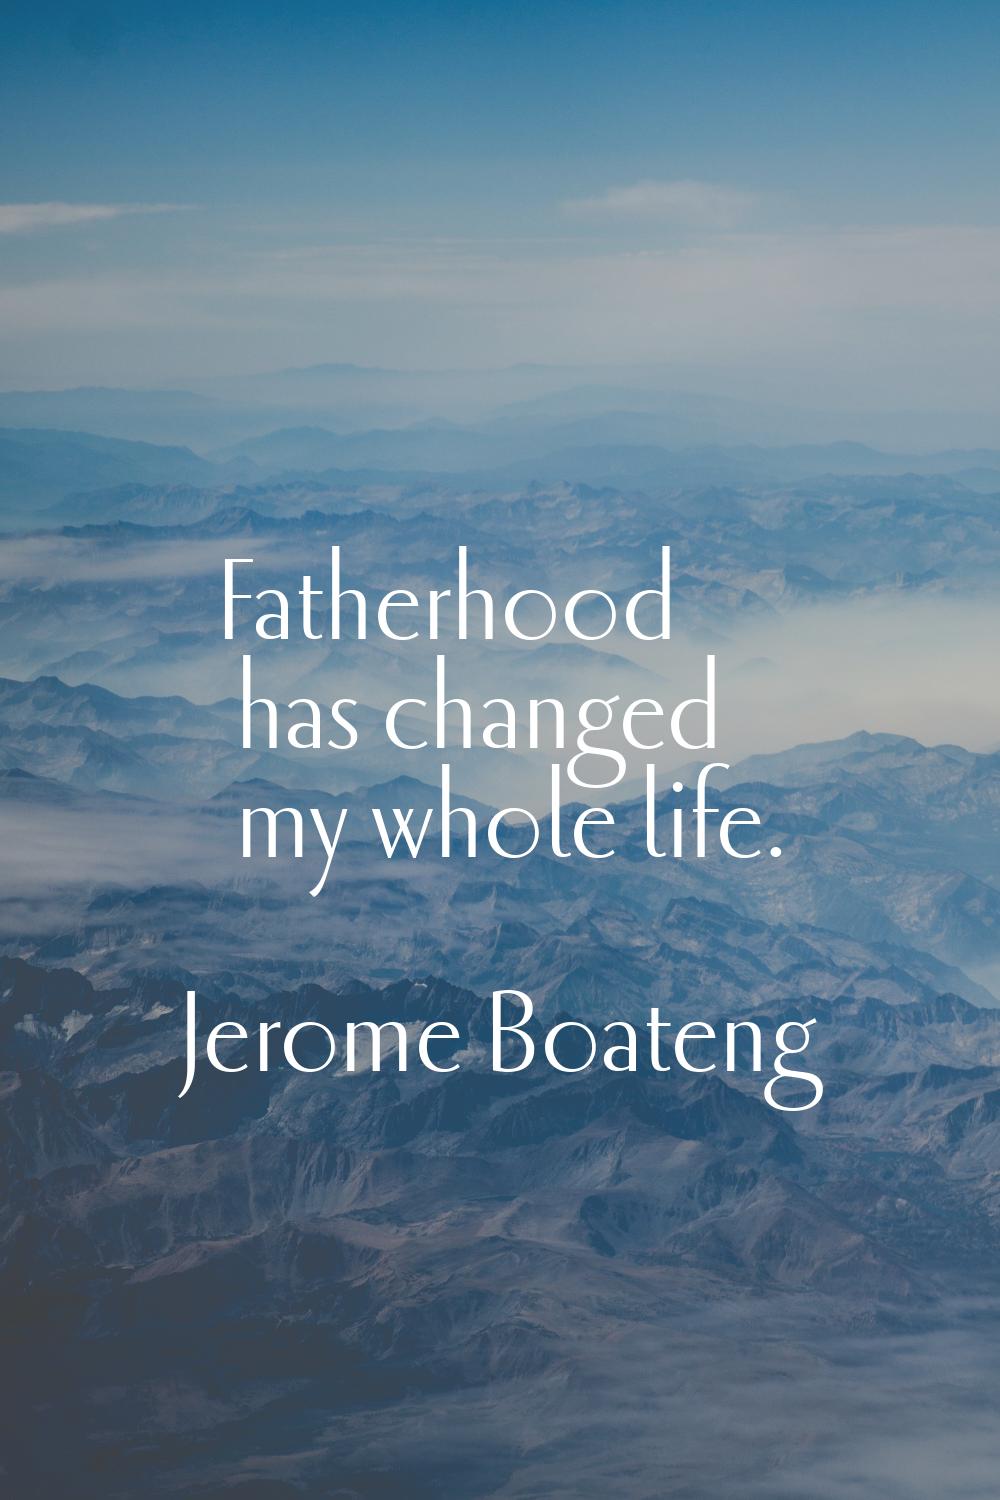 Fatherhood has changed my whole life.